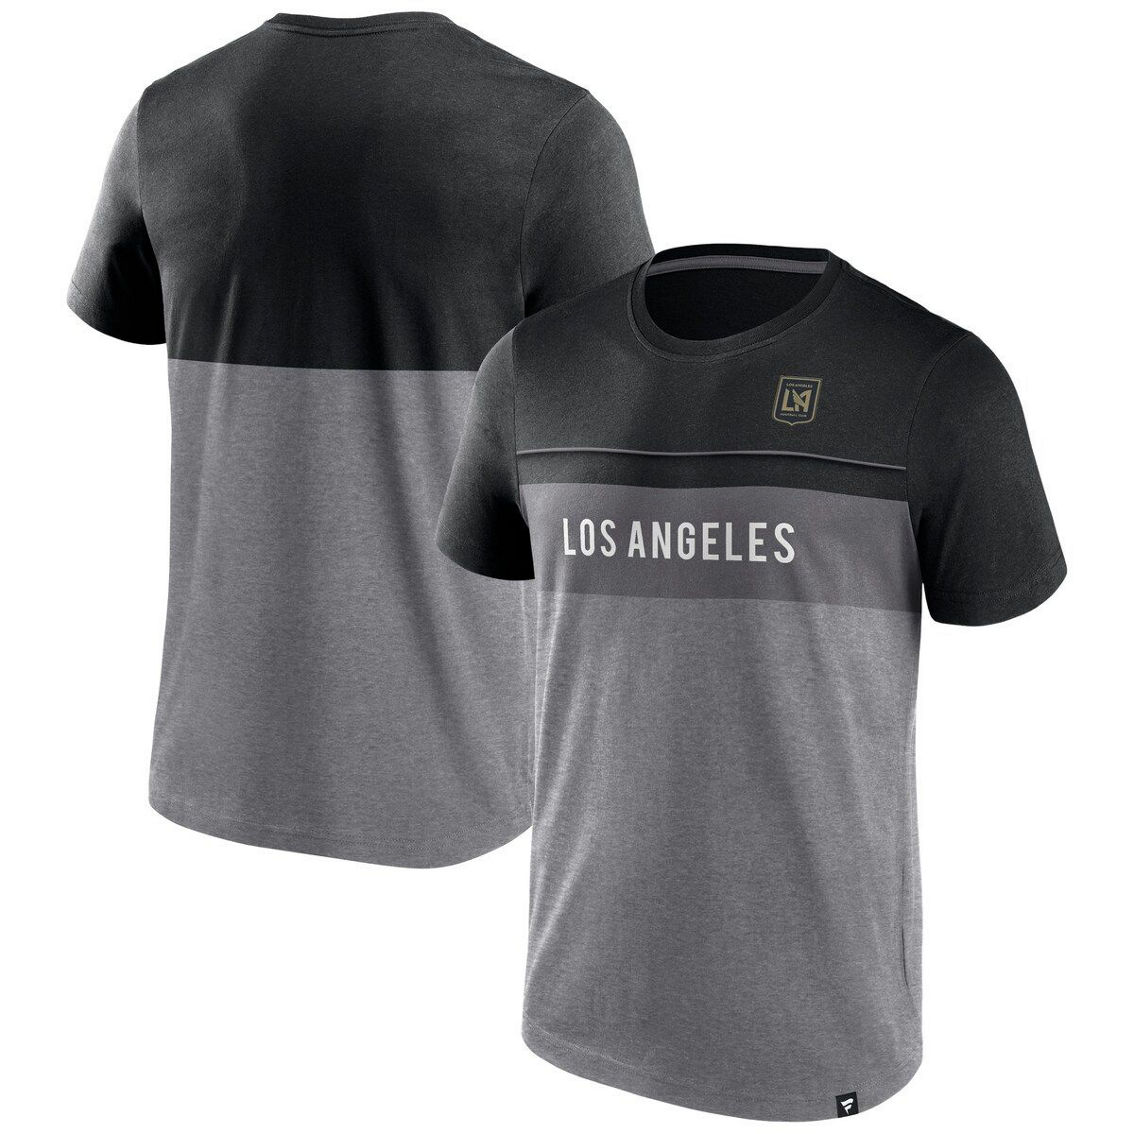 Fanatics Branded Men's Black/Gray LAFC Striking Distance T-Shirt - Image 2 of 4